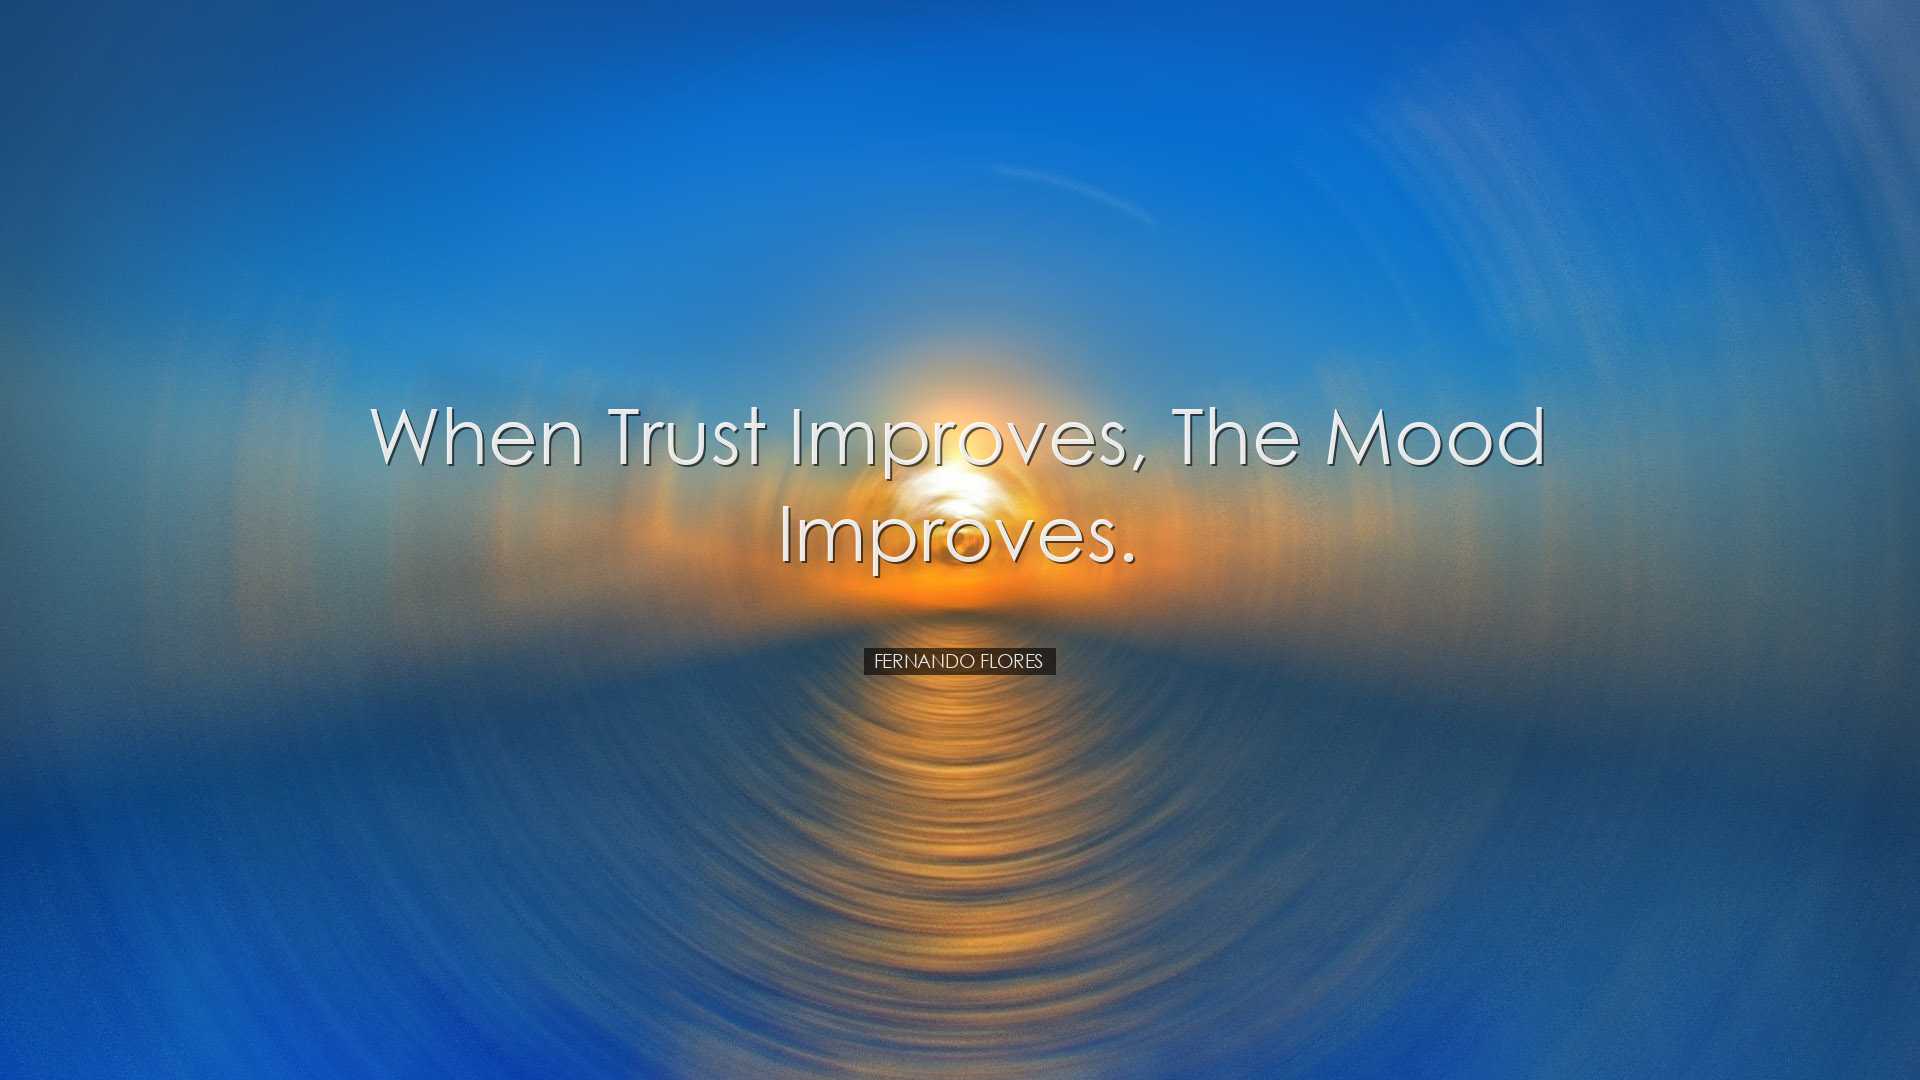 When trust improves, the mood improves. - Fernando Flores